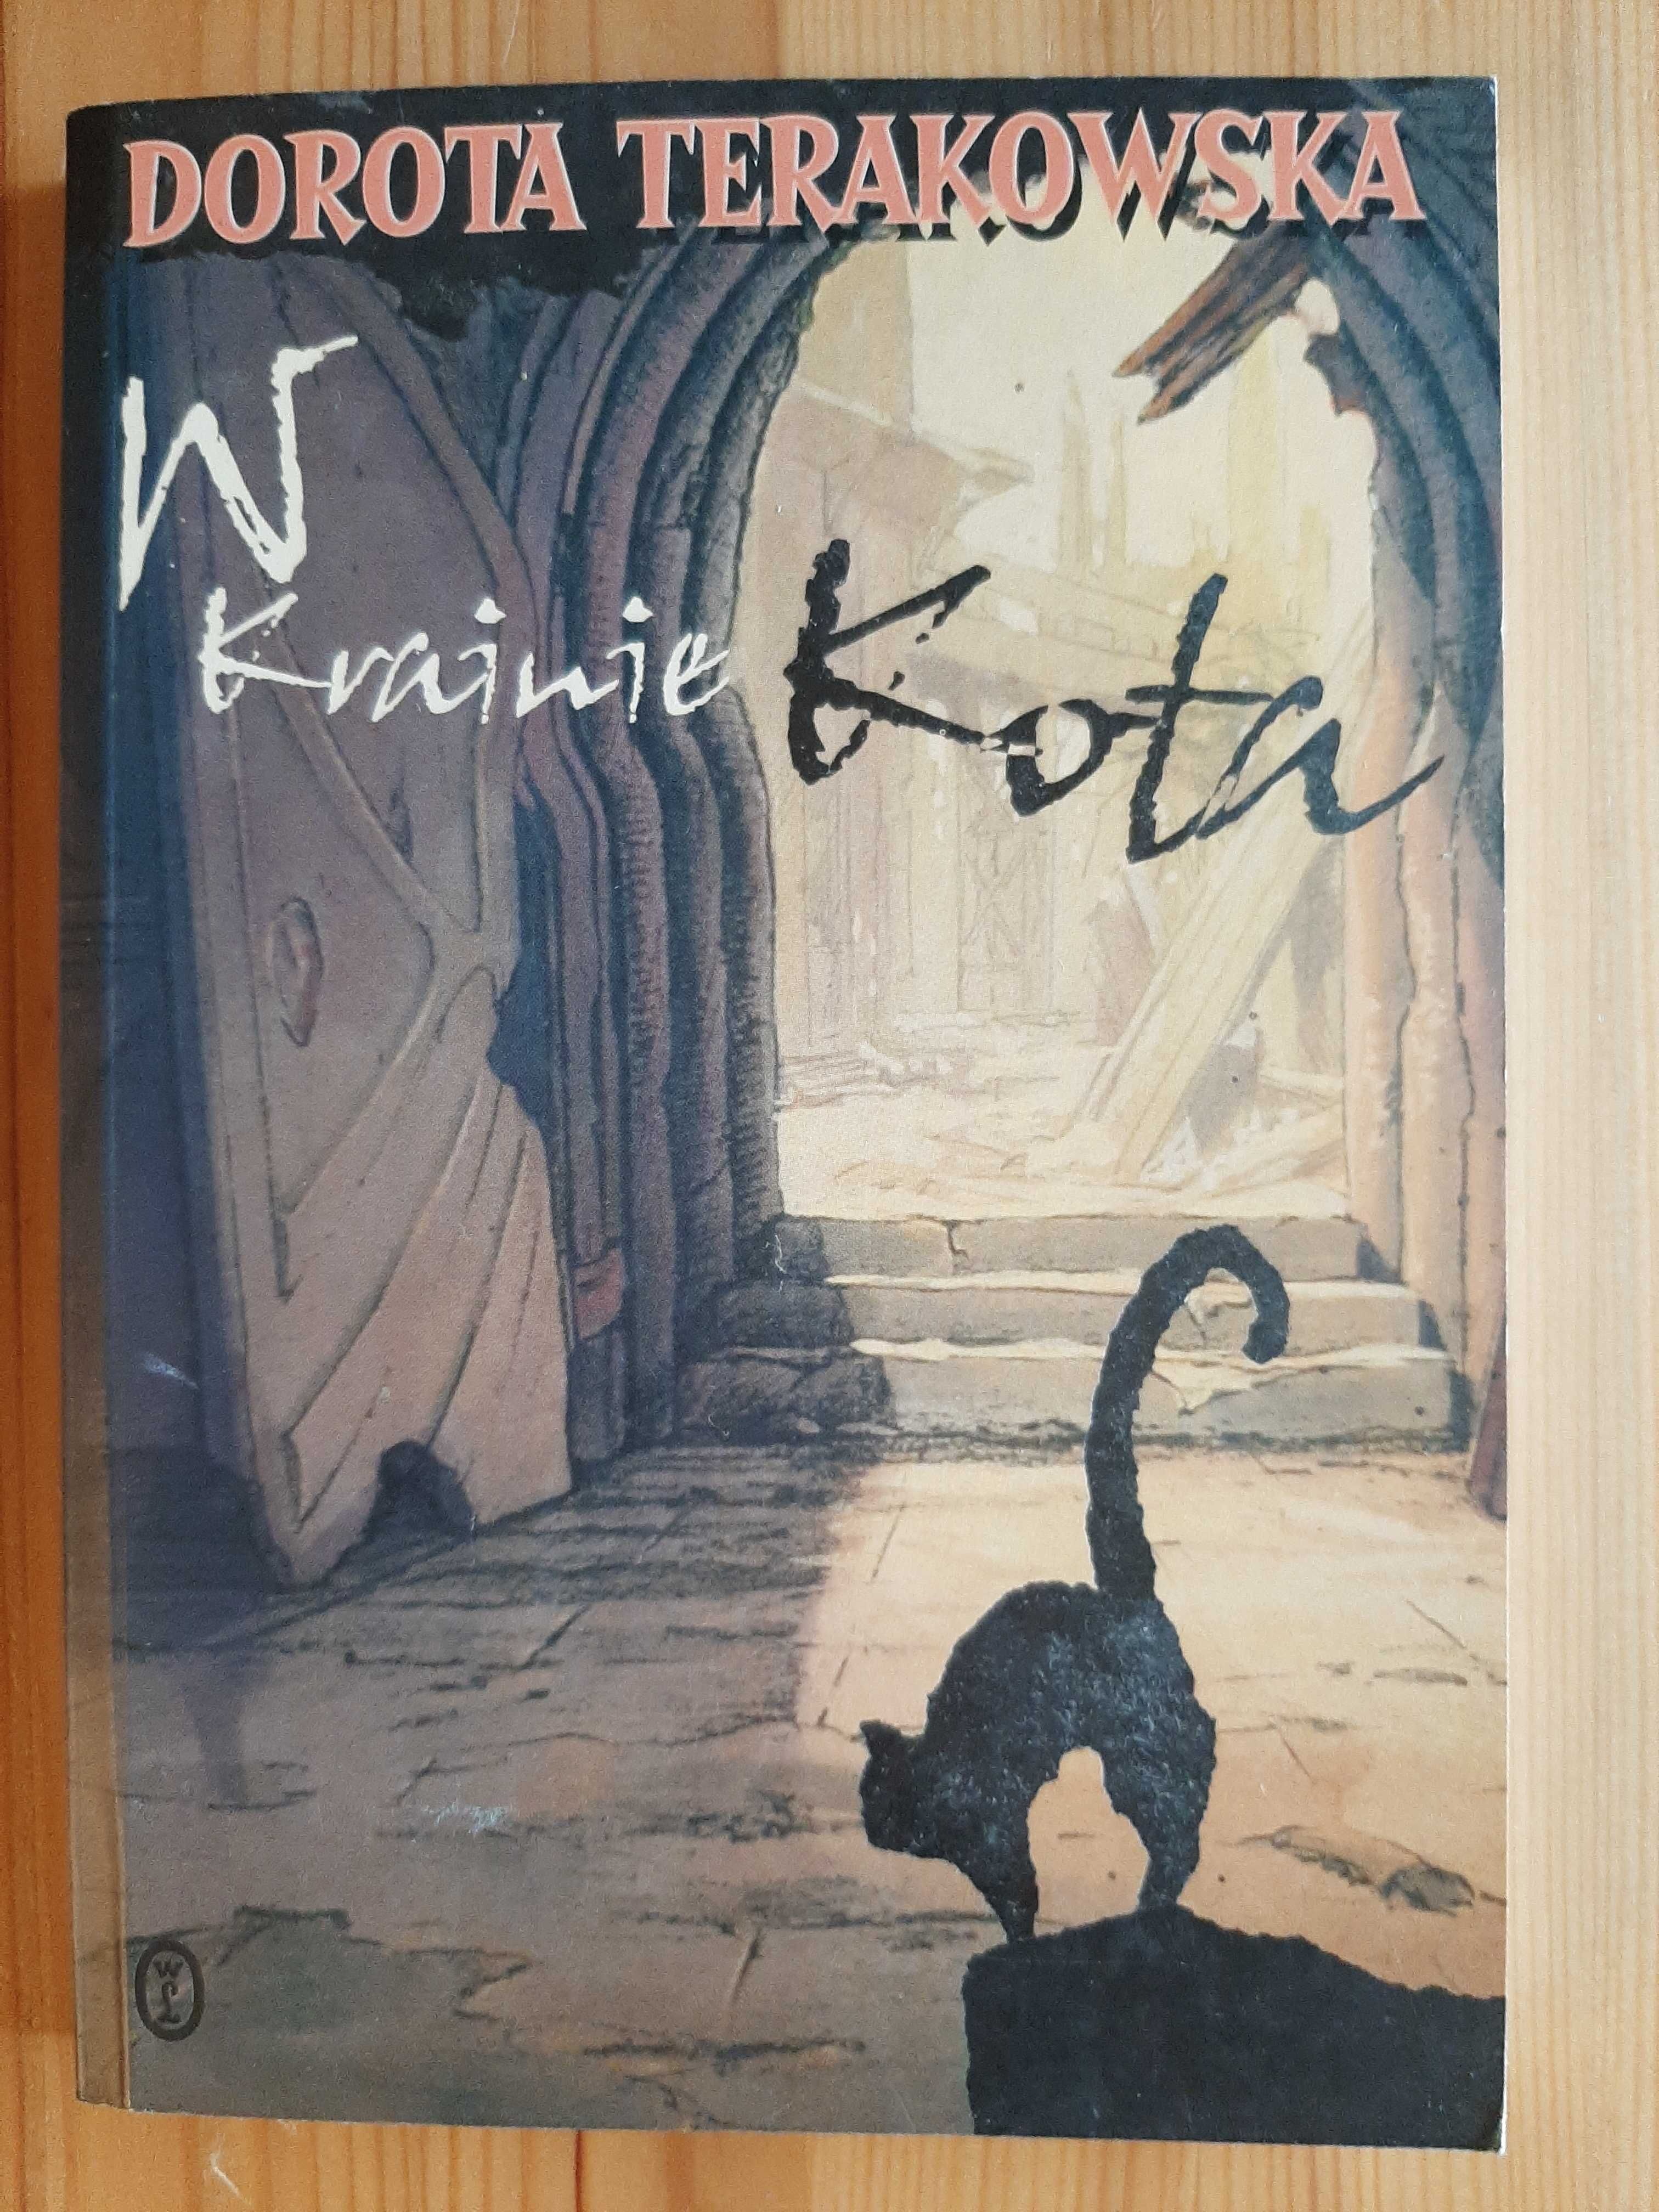 Książka "W krainie kota", Dorota Terakowska